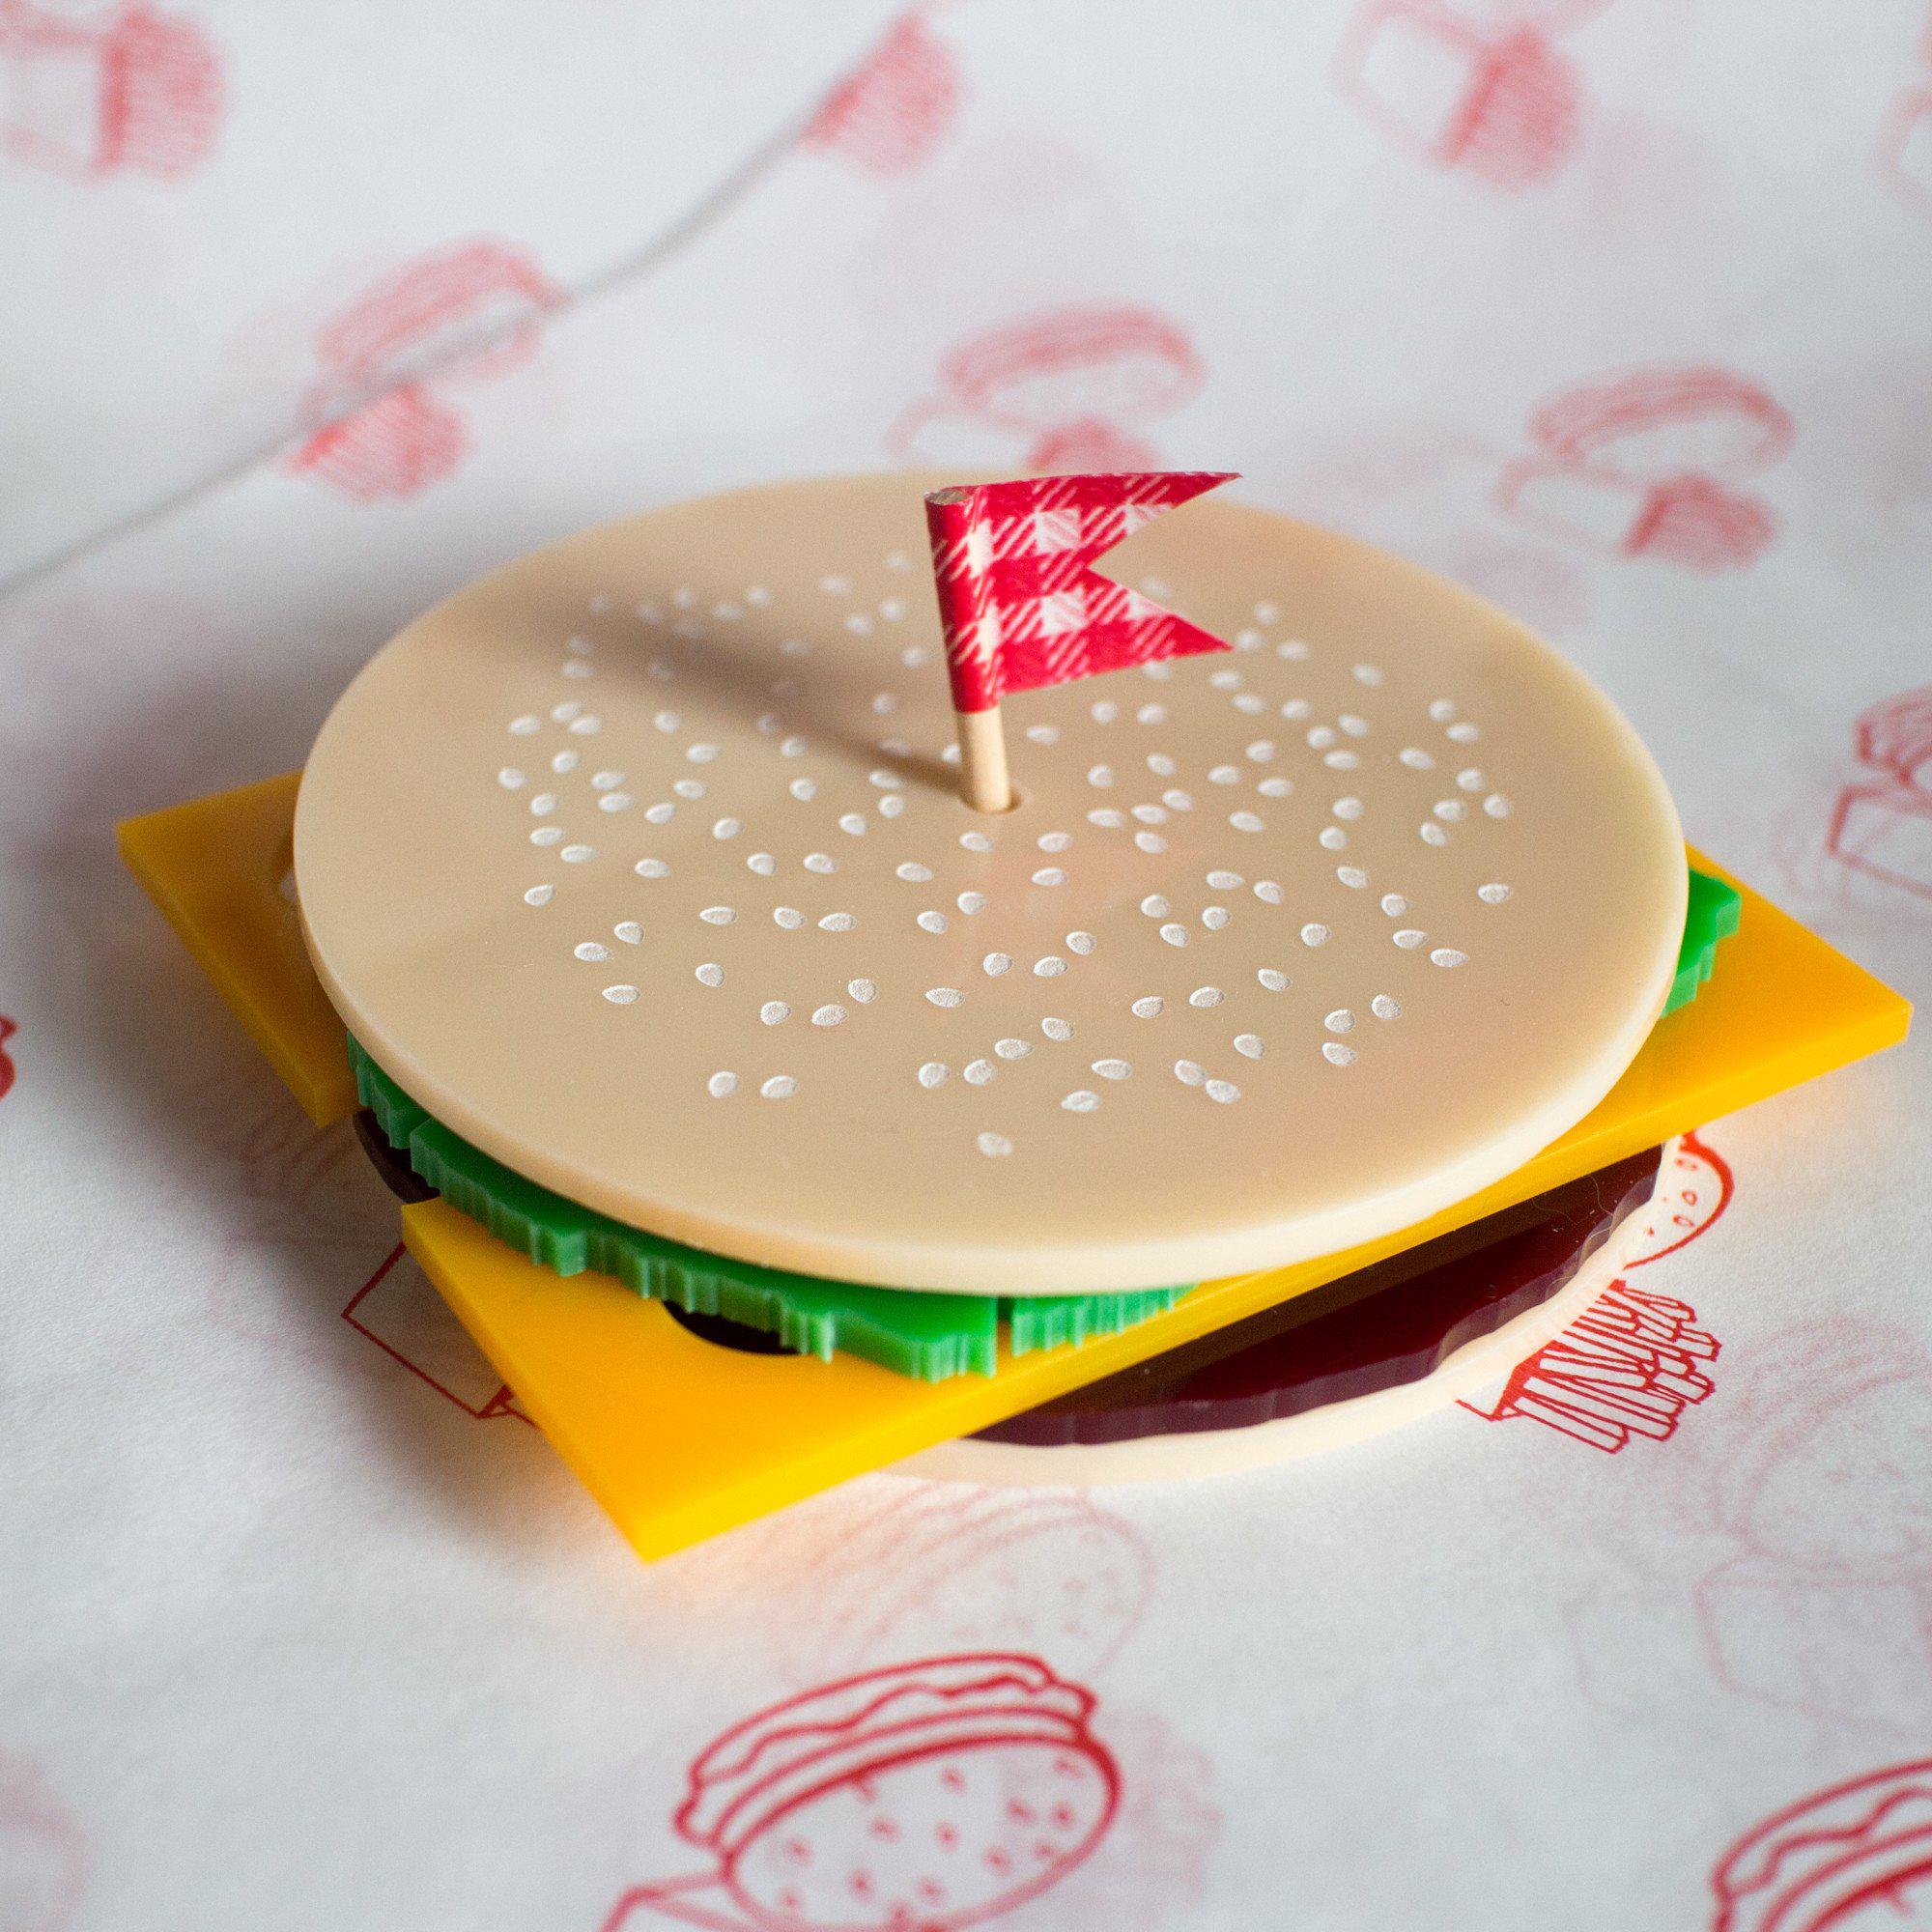 Burger Coasters - Finest Imaginary